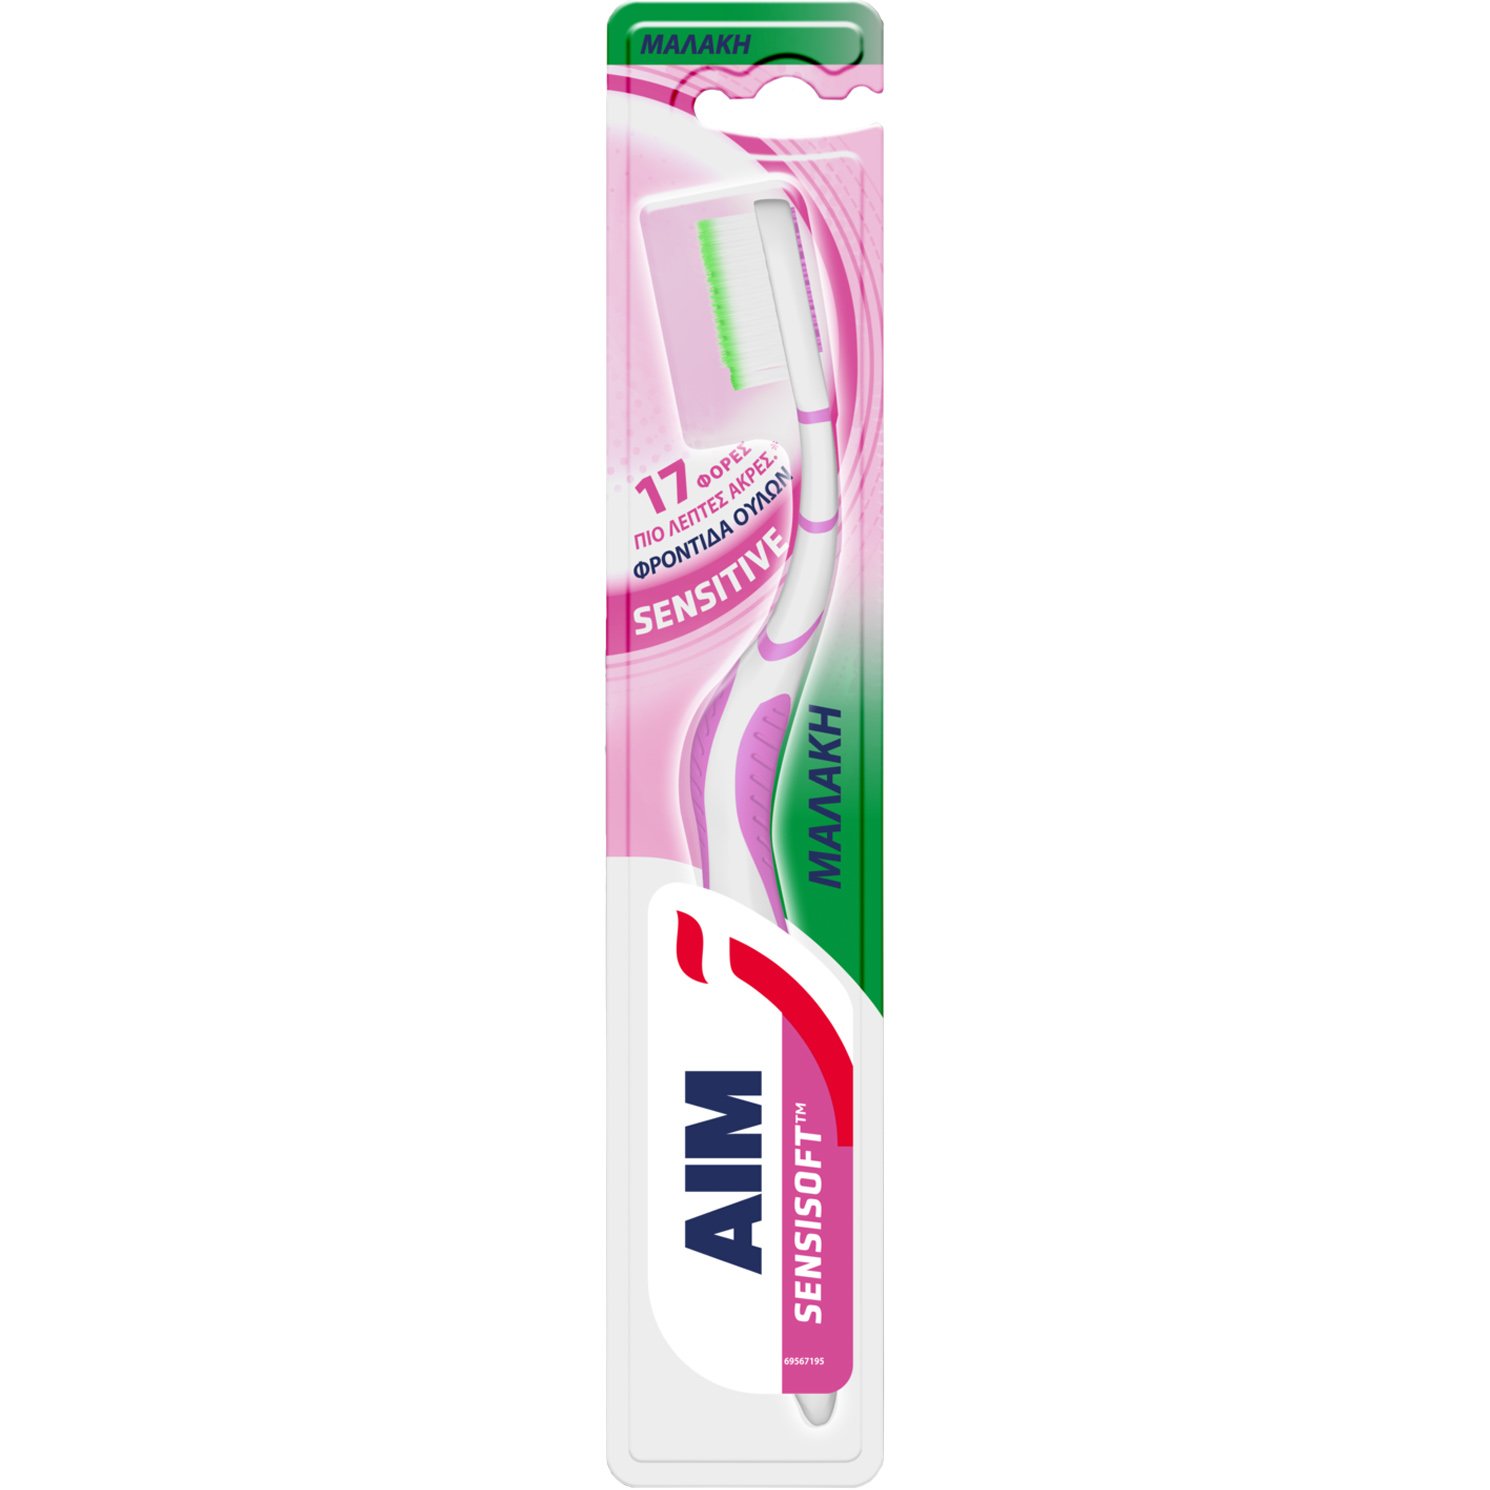 Aim Sensisoft Sensitive Toothbrush Χειροκίνητη Μαλακή Οδοντόβουρτσα με 17 Φορές πιο Λεπτές Άκρες για τη Φροντίδα των Ούλων 1 Τεμάχιο – Ροζ / Πράσινο